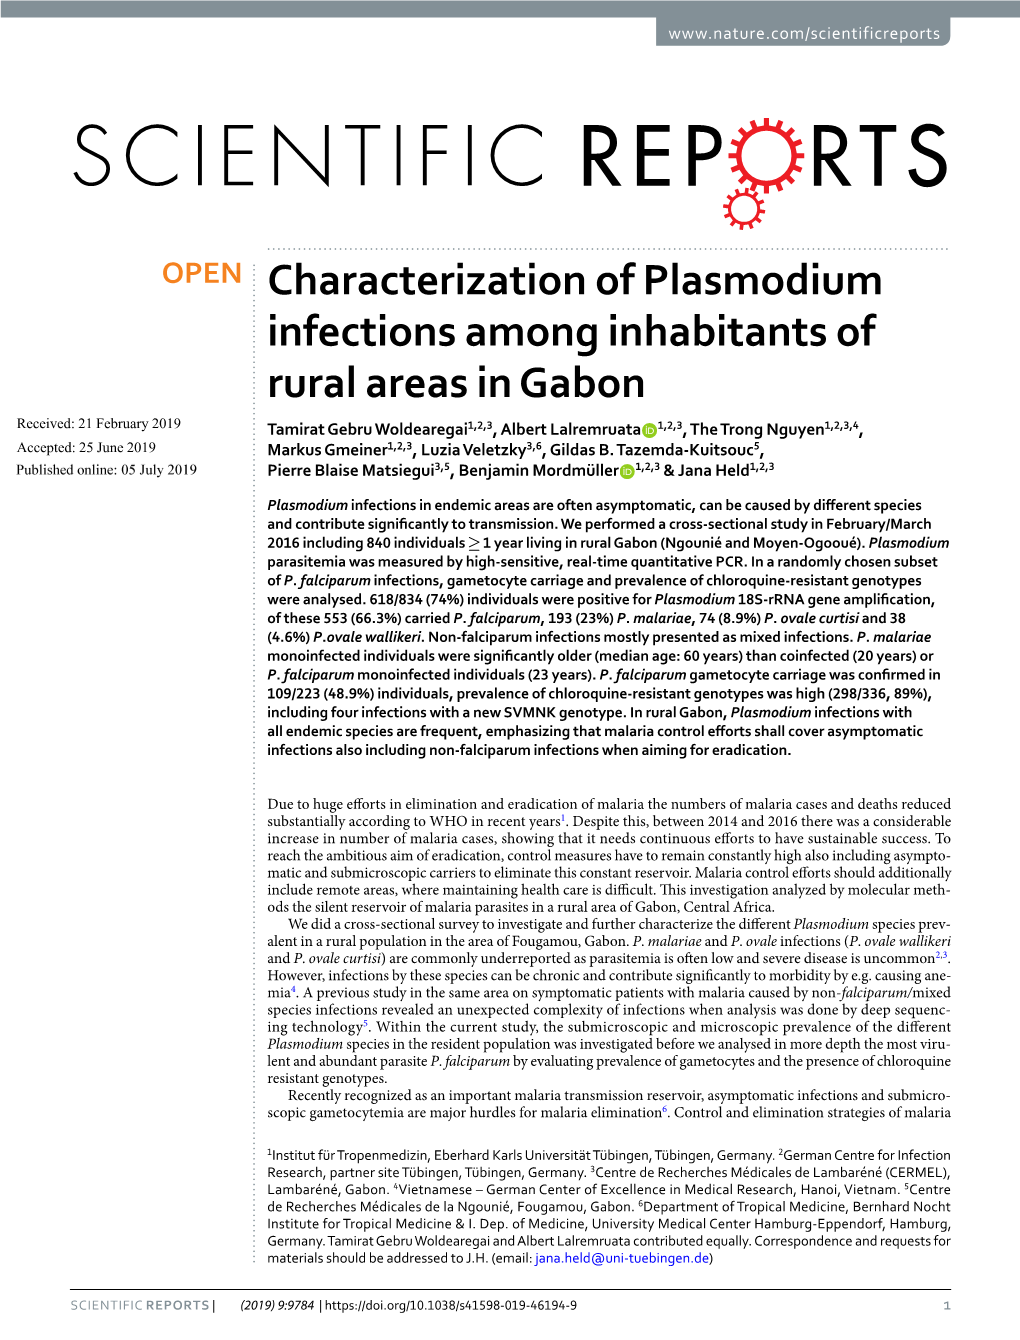 Characterization of Plasmodium Infections Among Inhabitants Of